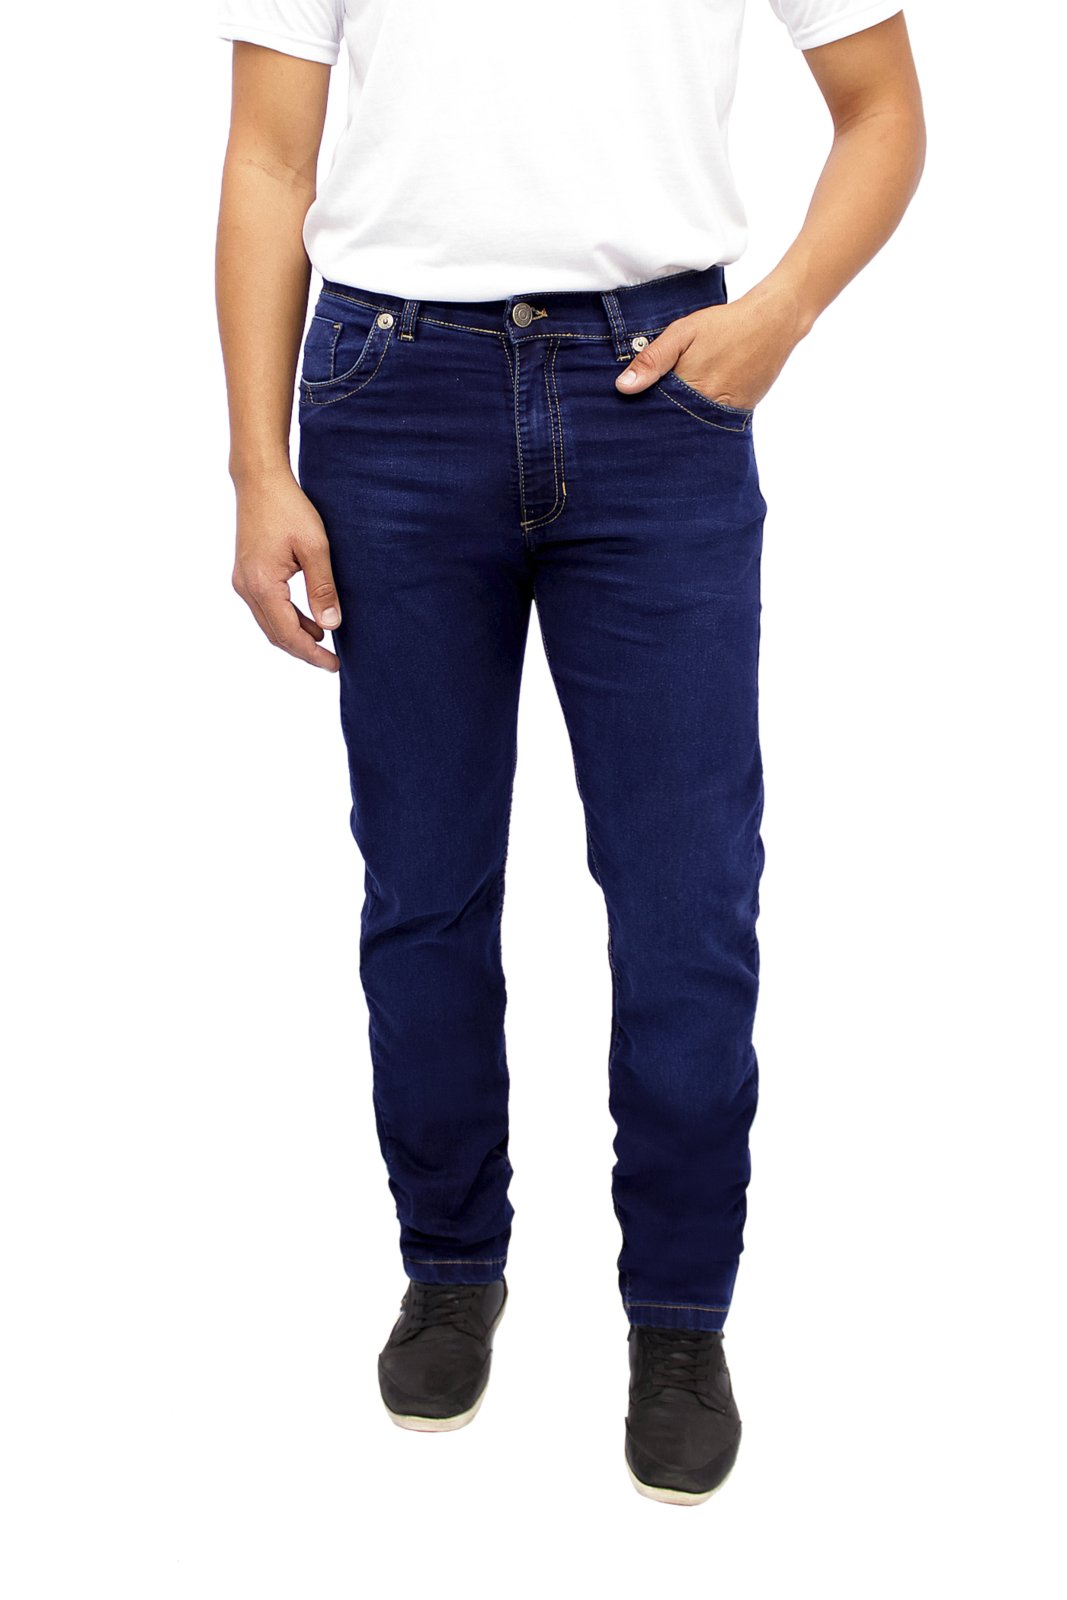 calça jeans young style masculina